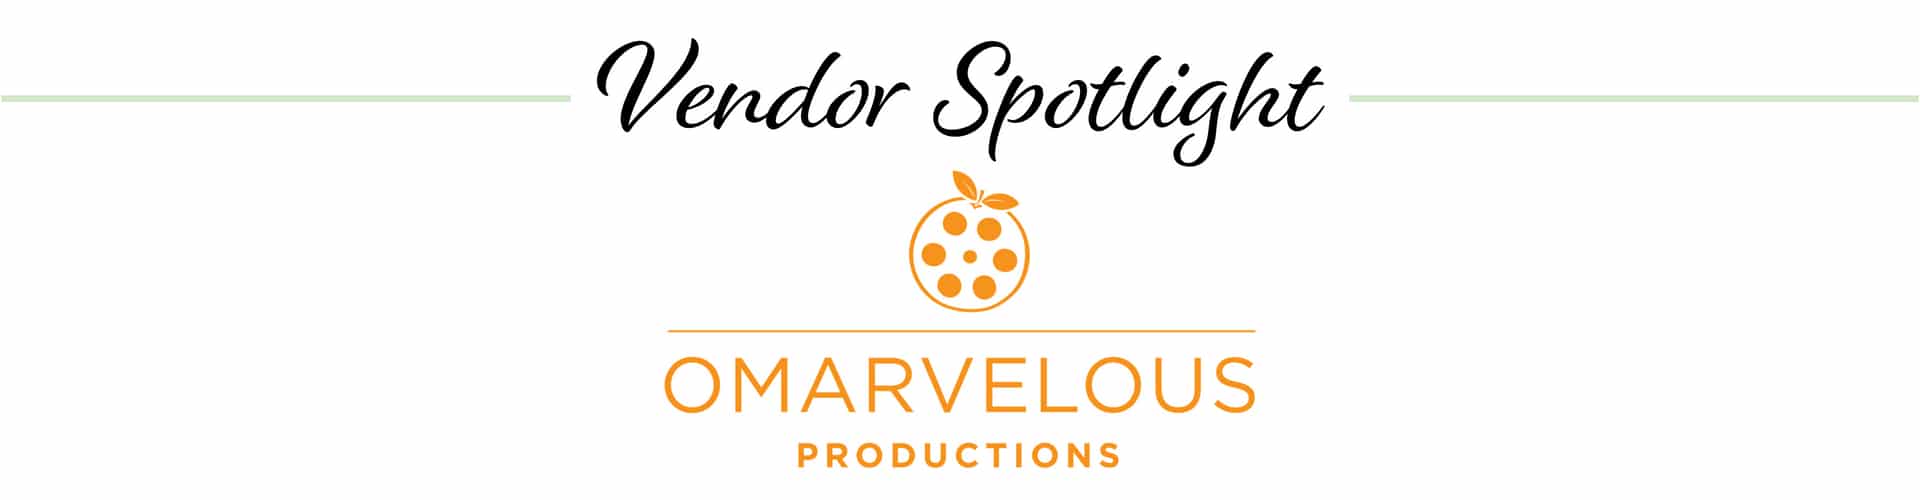 Omarvelous Productions logo